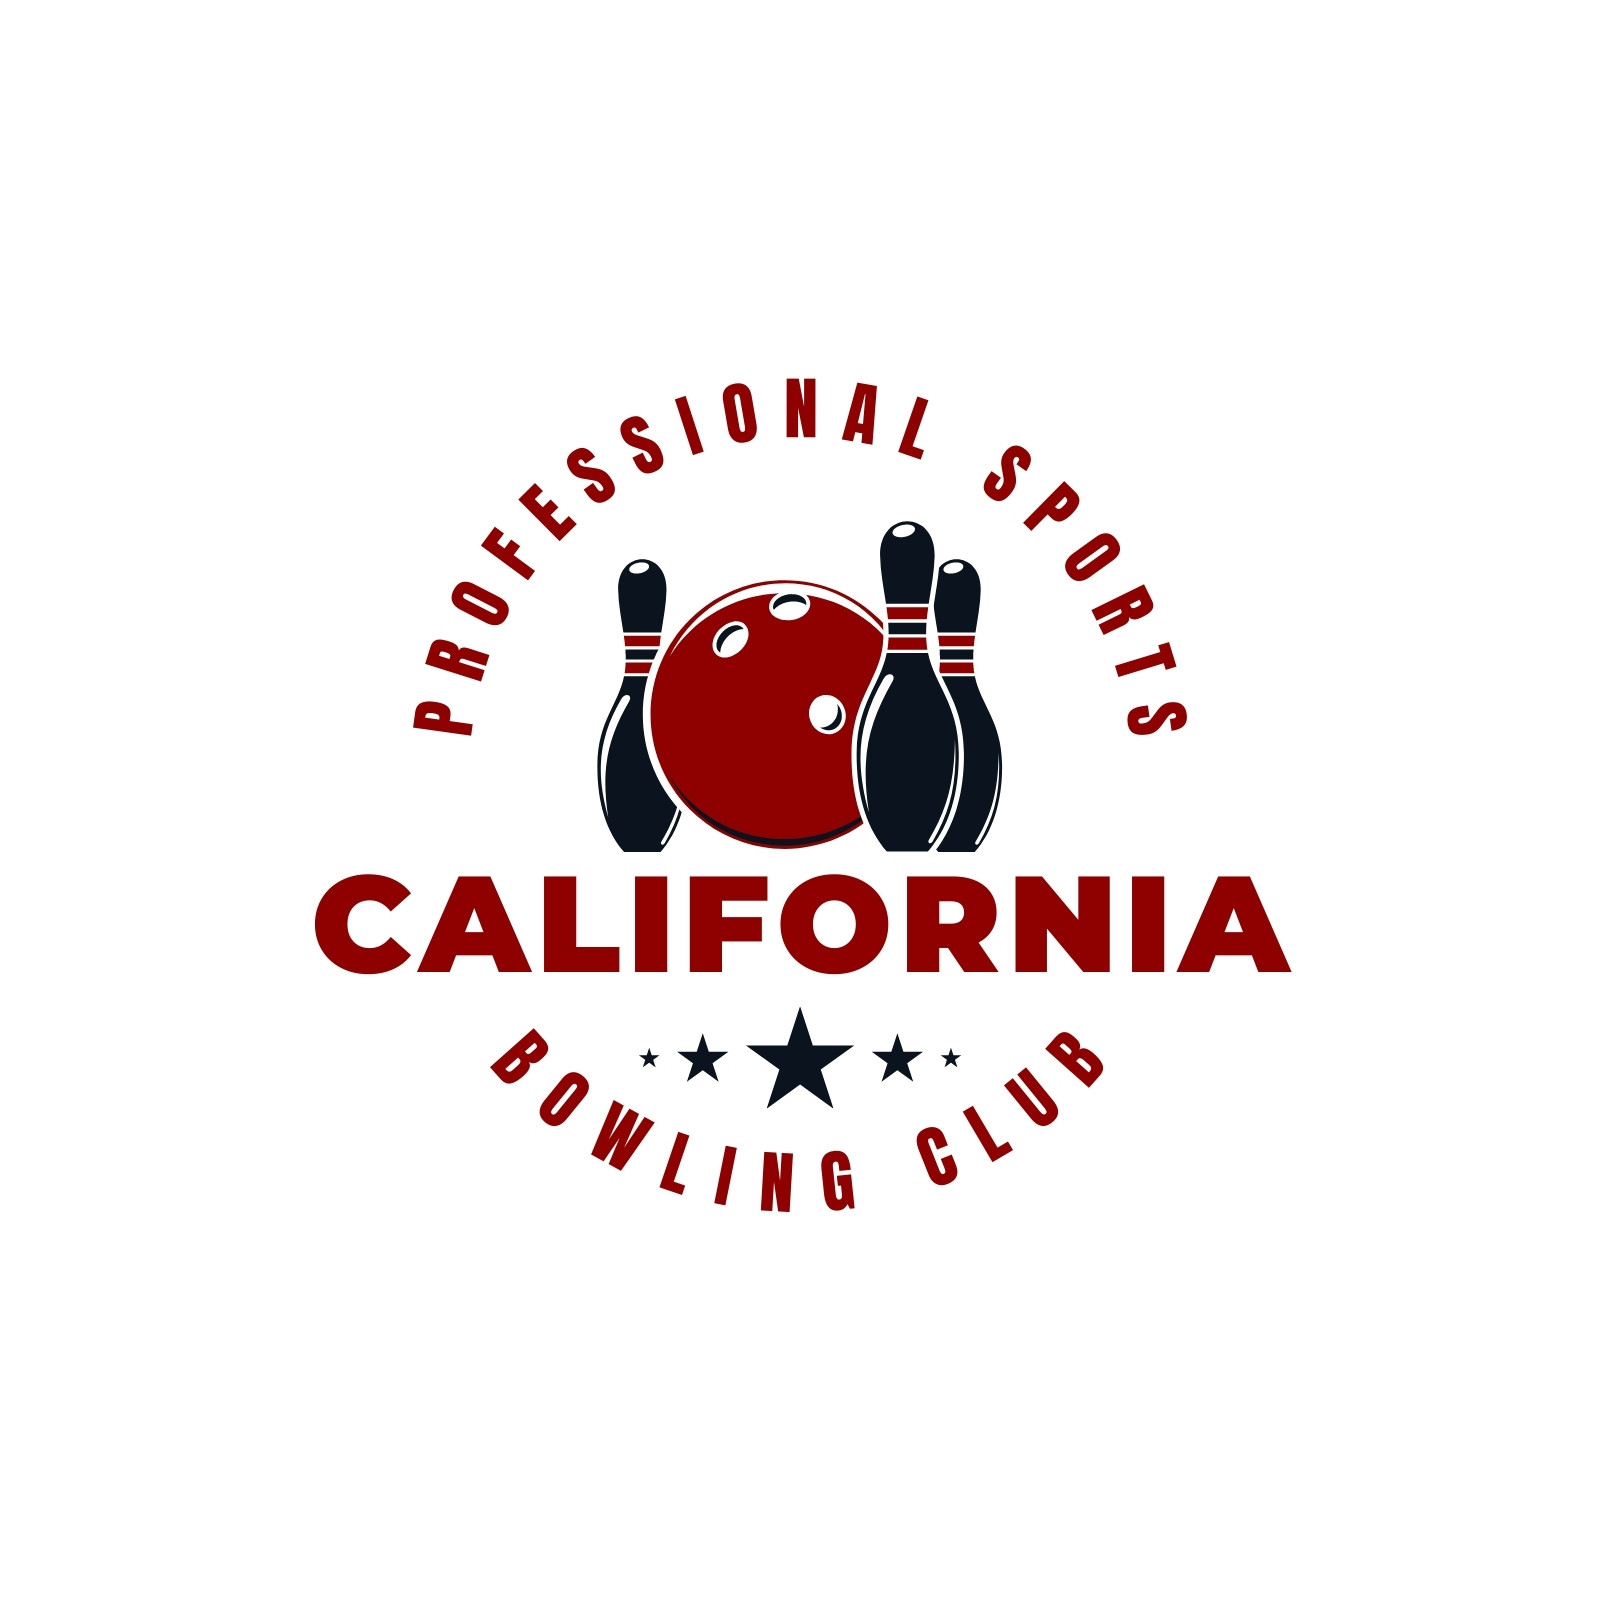 professional sports club logos